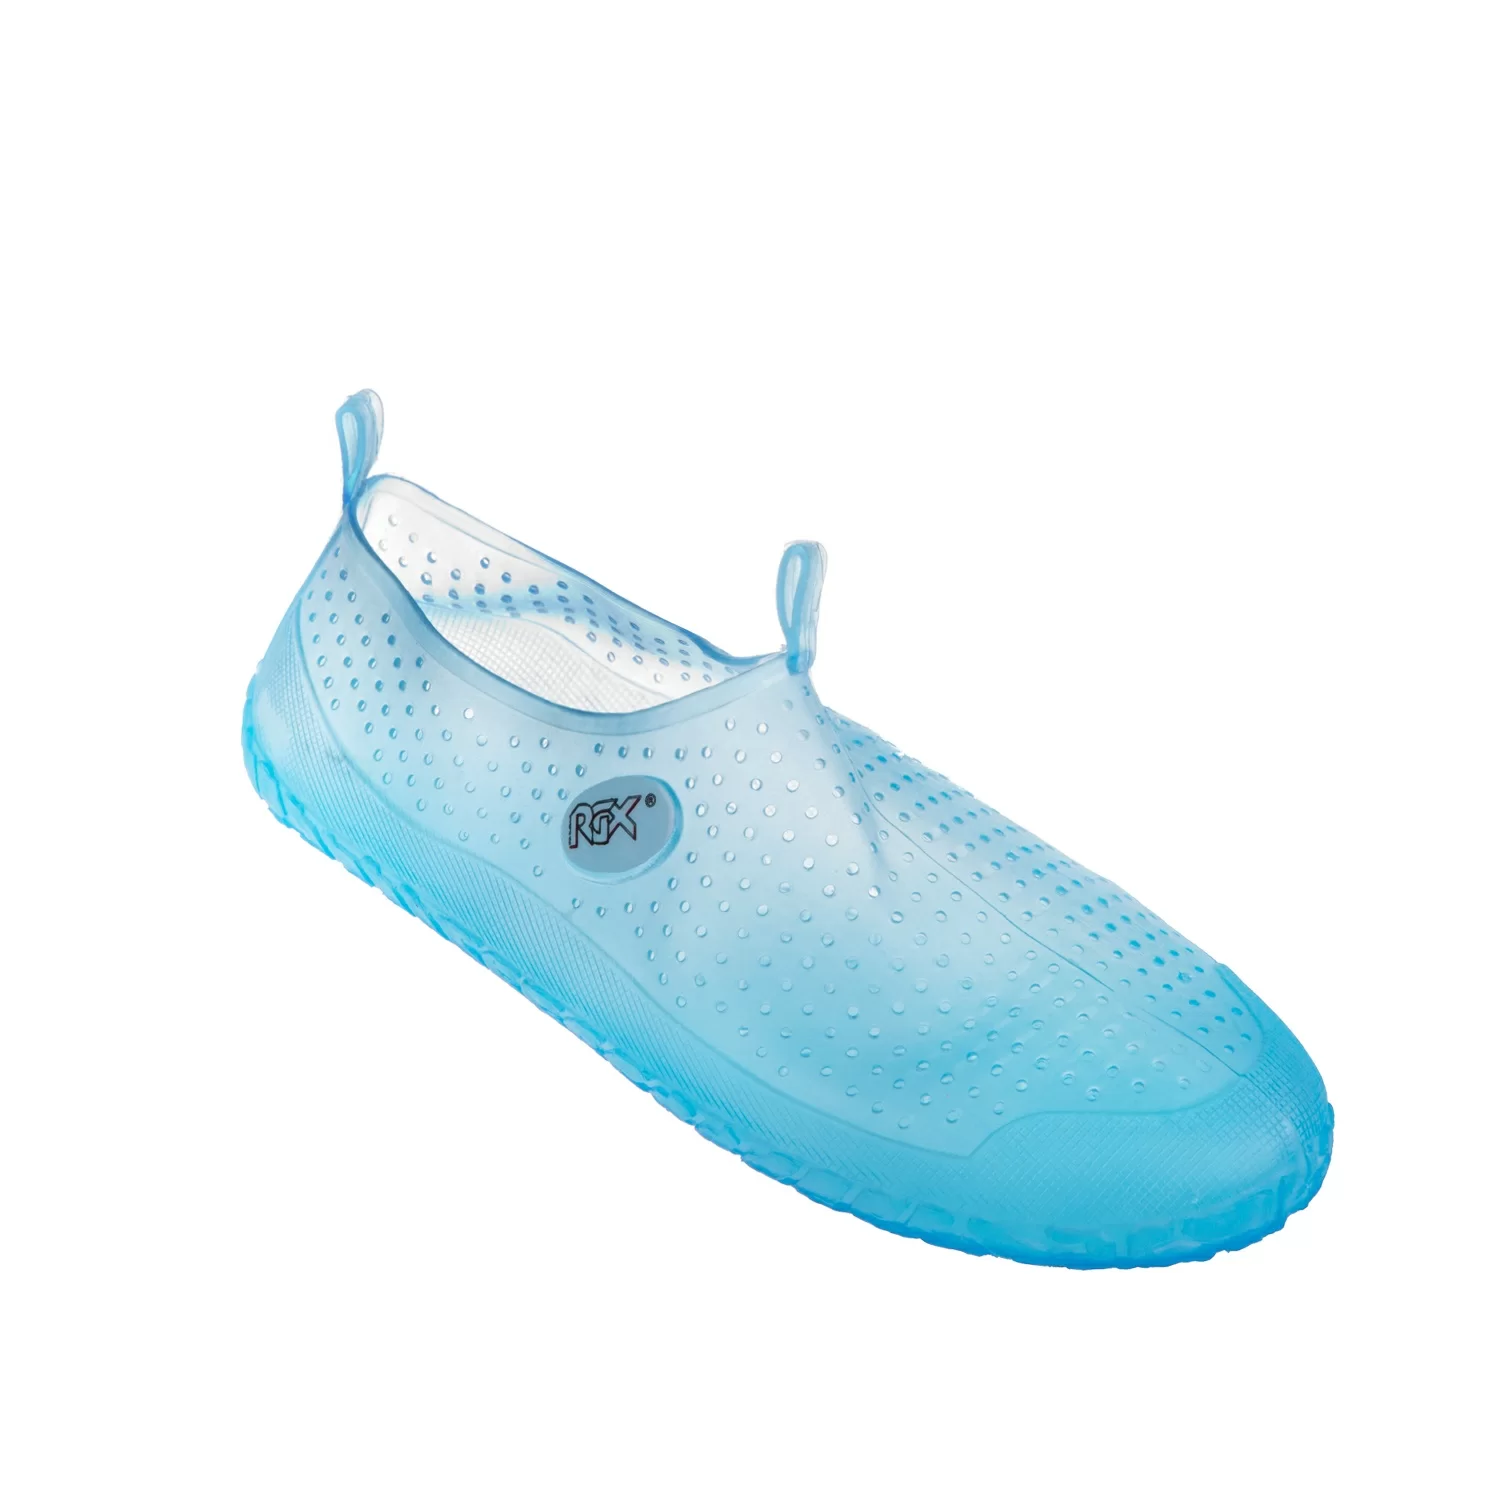 Реальное фото Тапочки для купания Флиппер синий С340-мтз/PS001 от магазина СпортЕВ